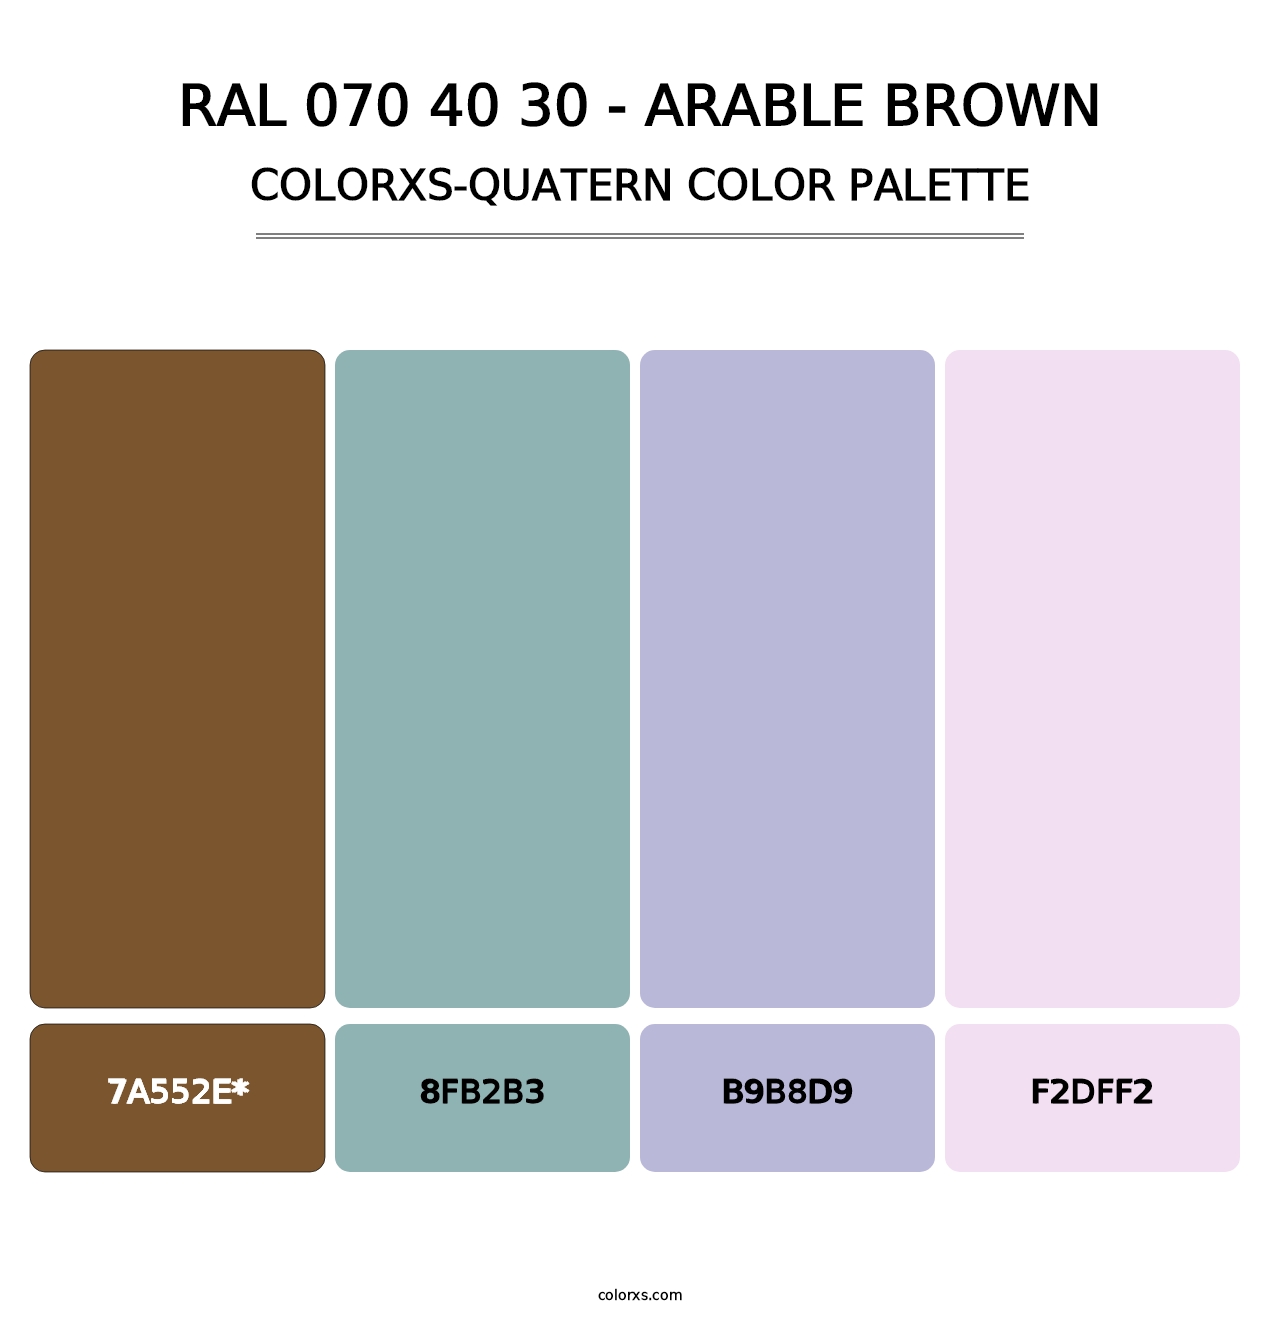 RAL 070 40 30 - Arable Brown - Colorxs Quatern Palette